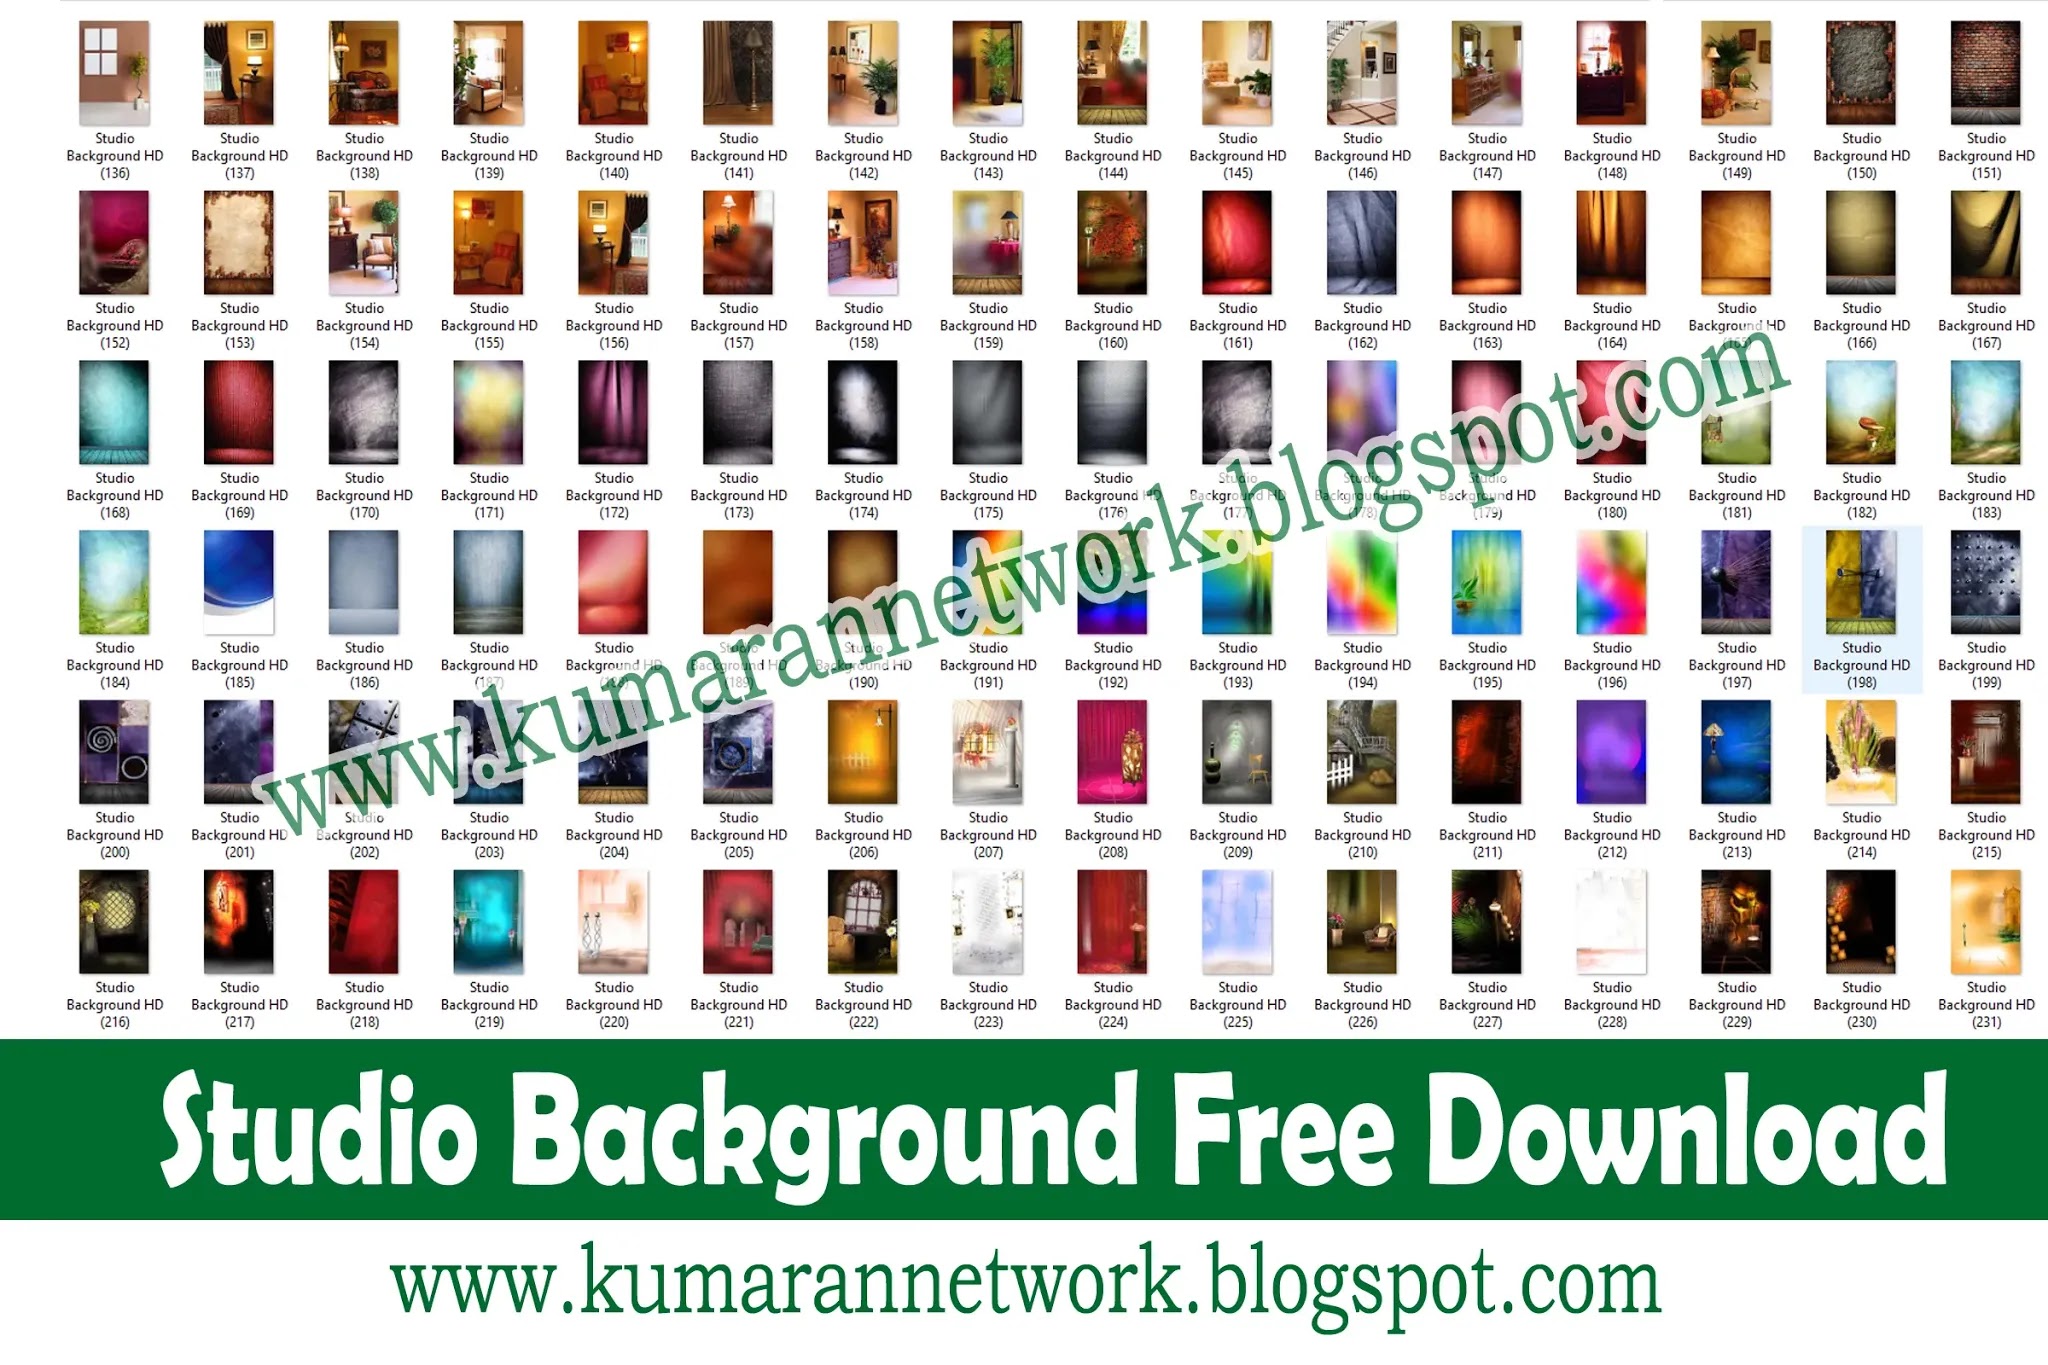 Kumaran Network: Background Image